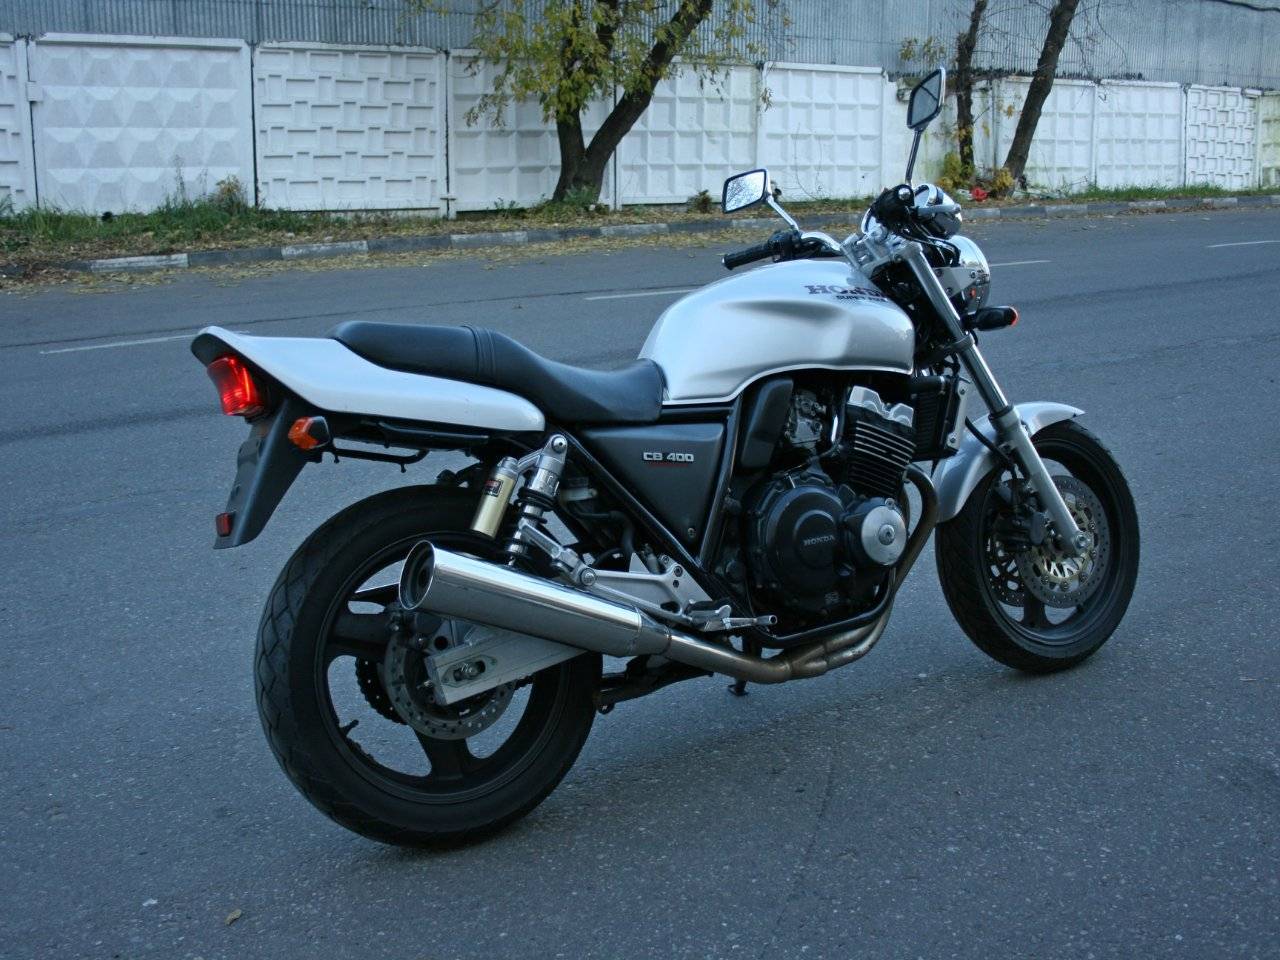 Honda cb 400 (super four): review, history, specs - bikeswiki.com, japanese motorcycle encyclopedia